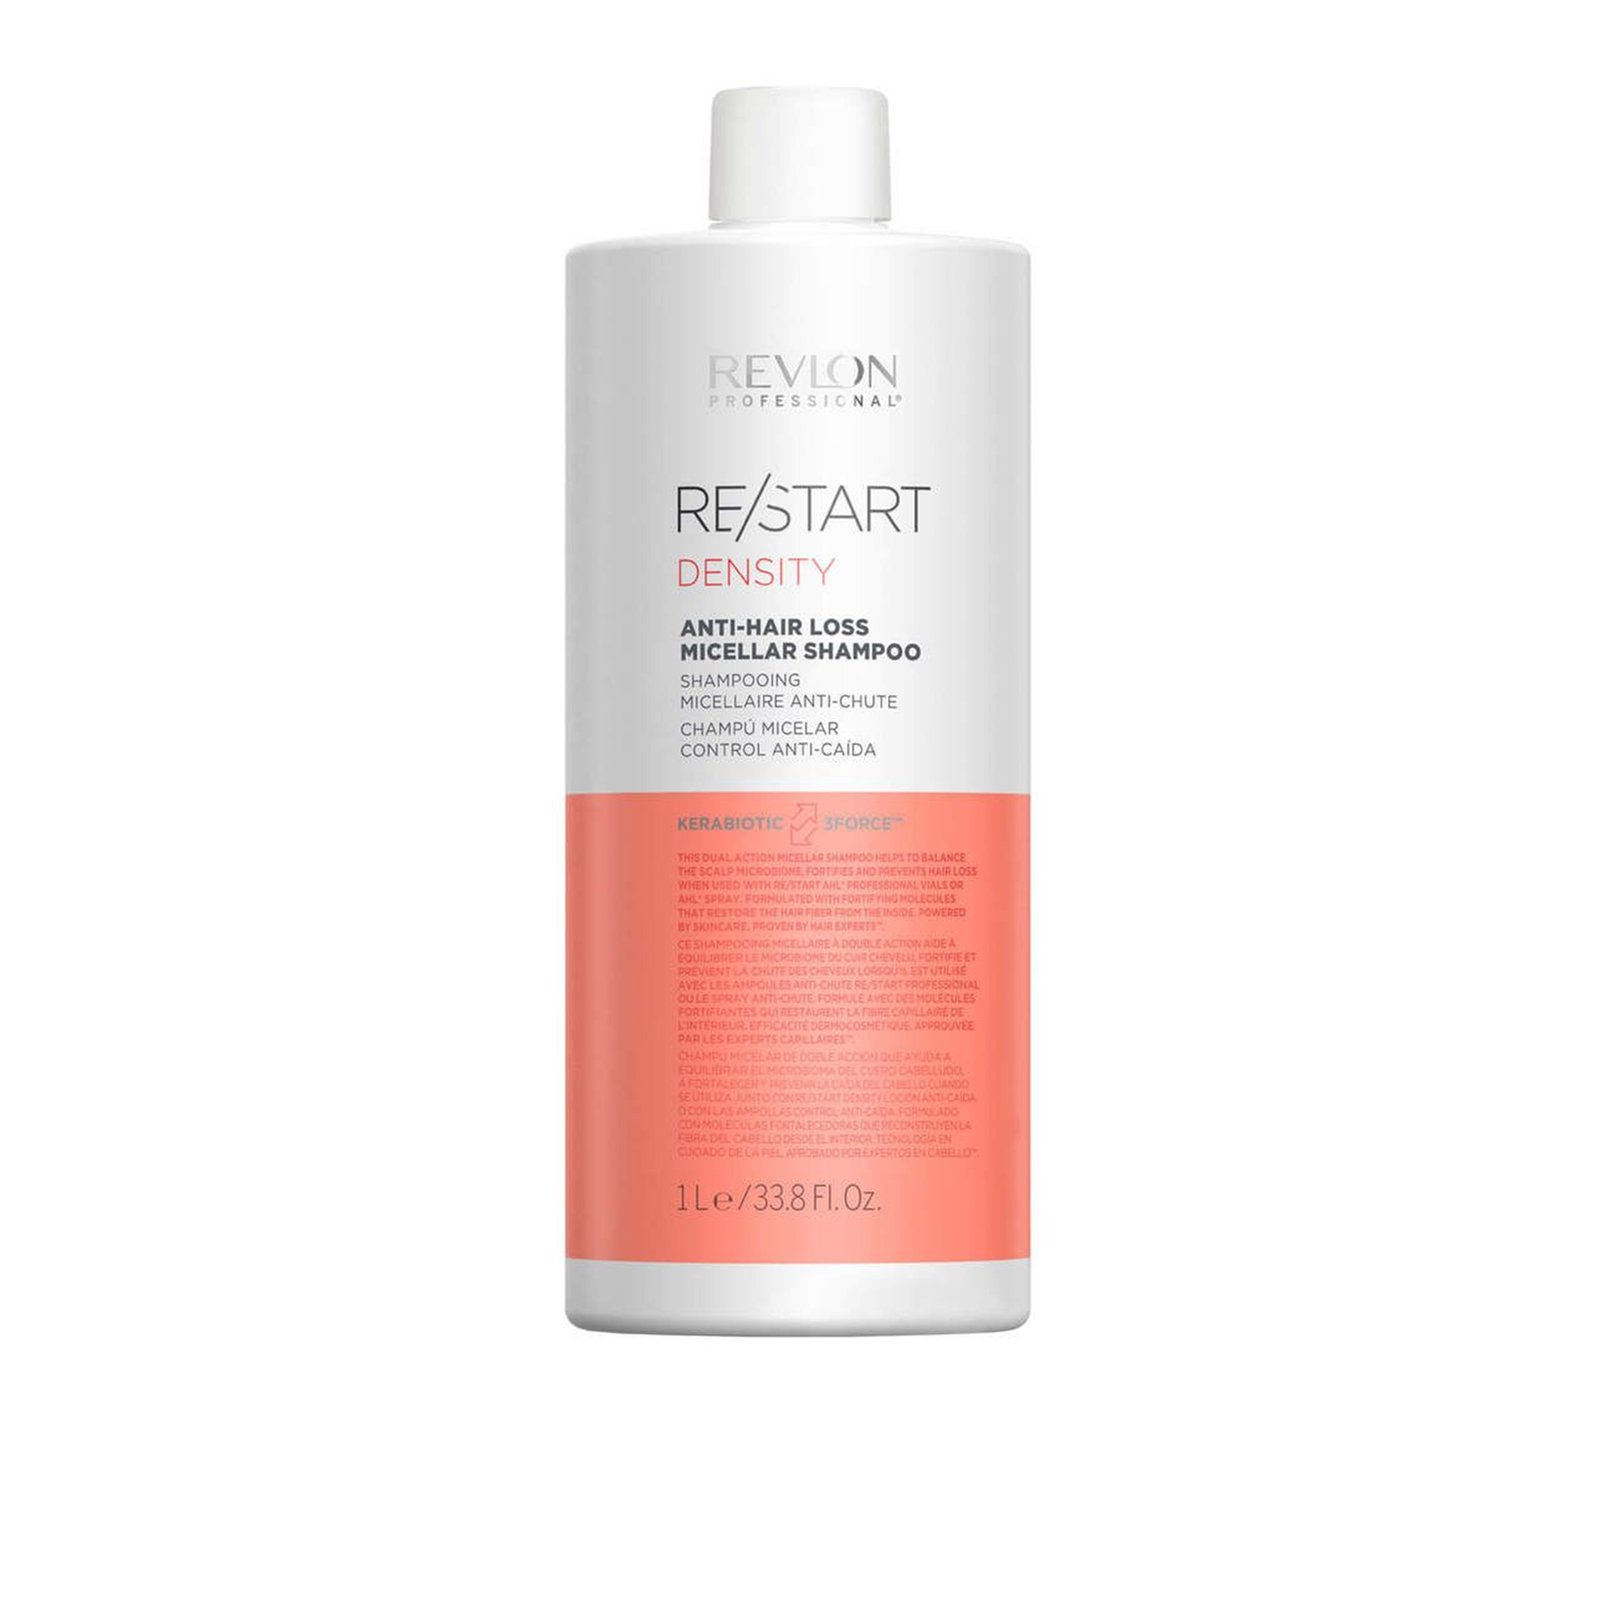 Revlon Professional Re/Start Density Anti-Hair Loss Micellar Shampoo 1L (33.81fl oz)